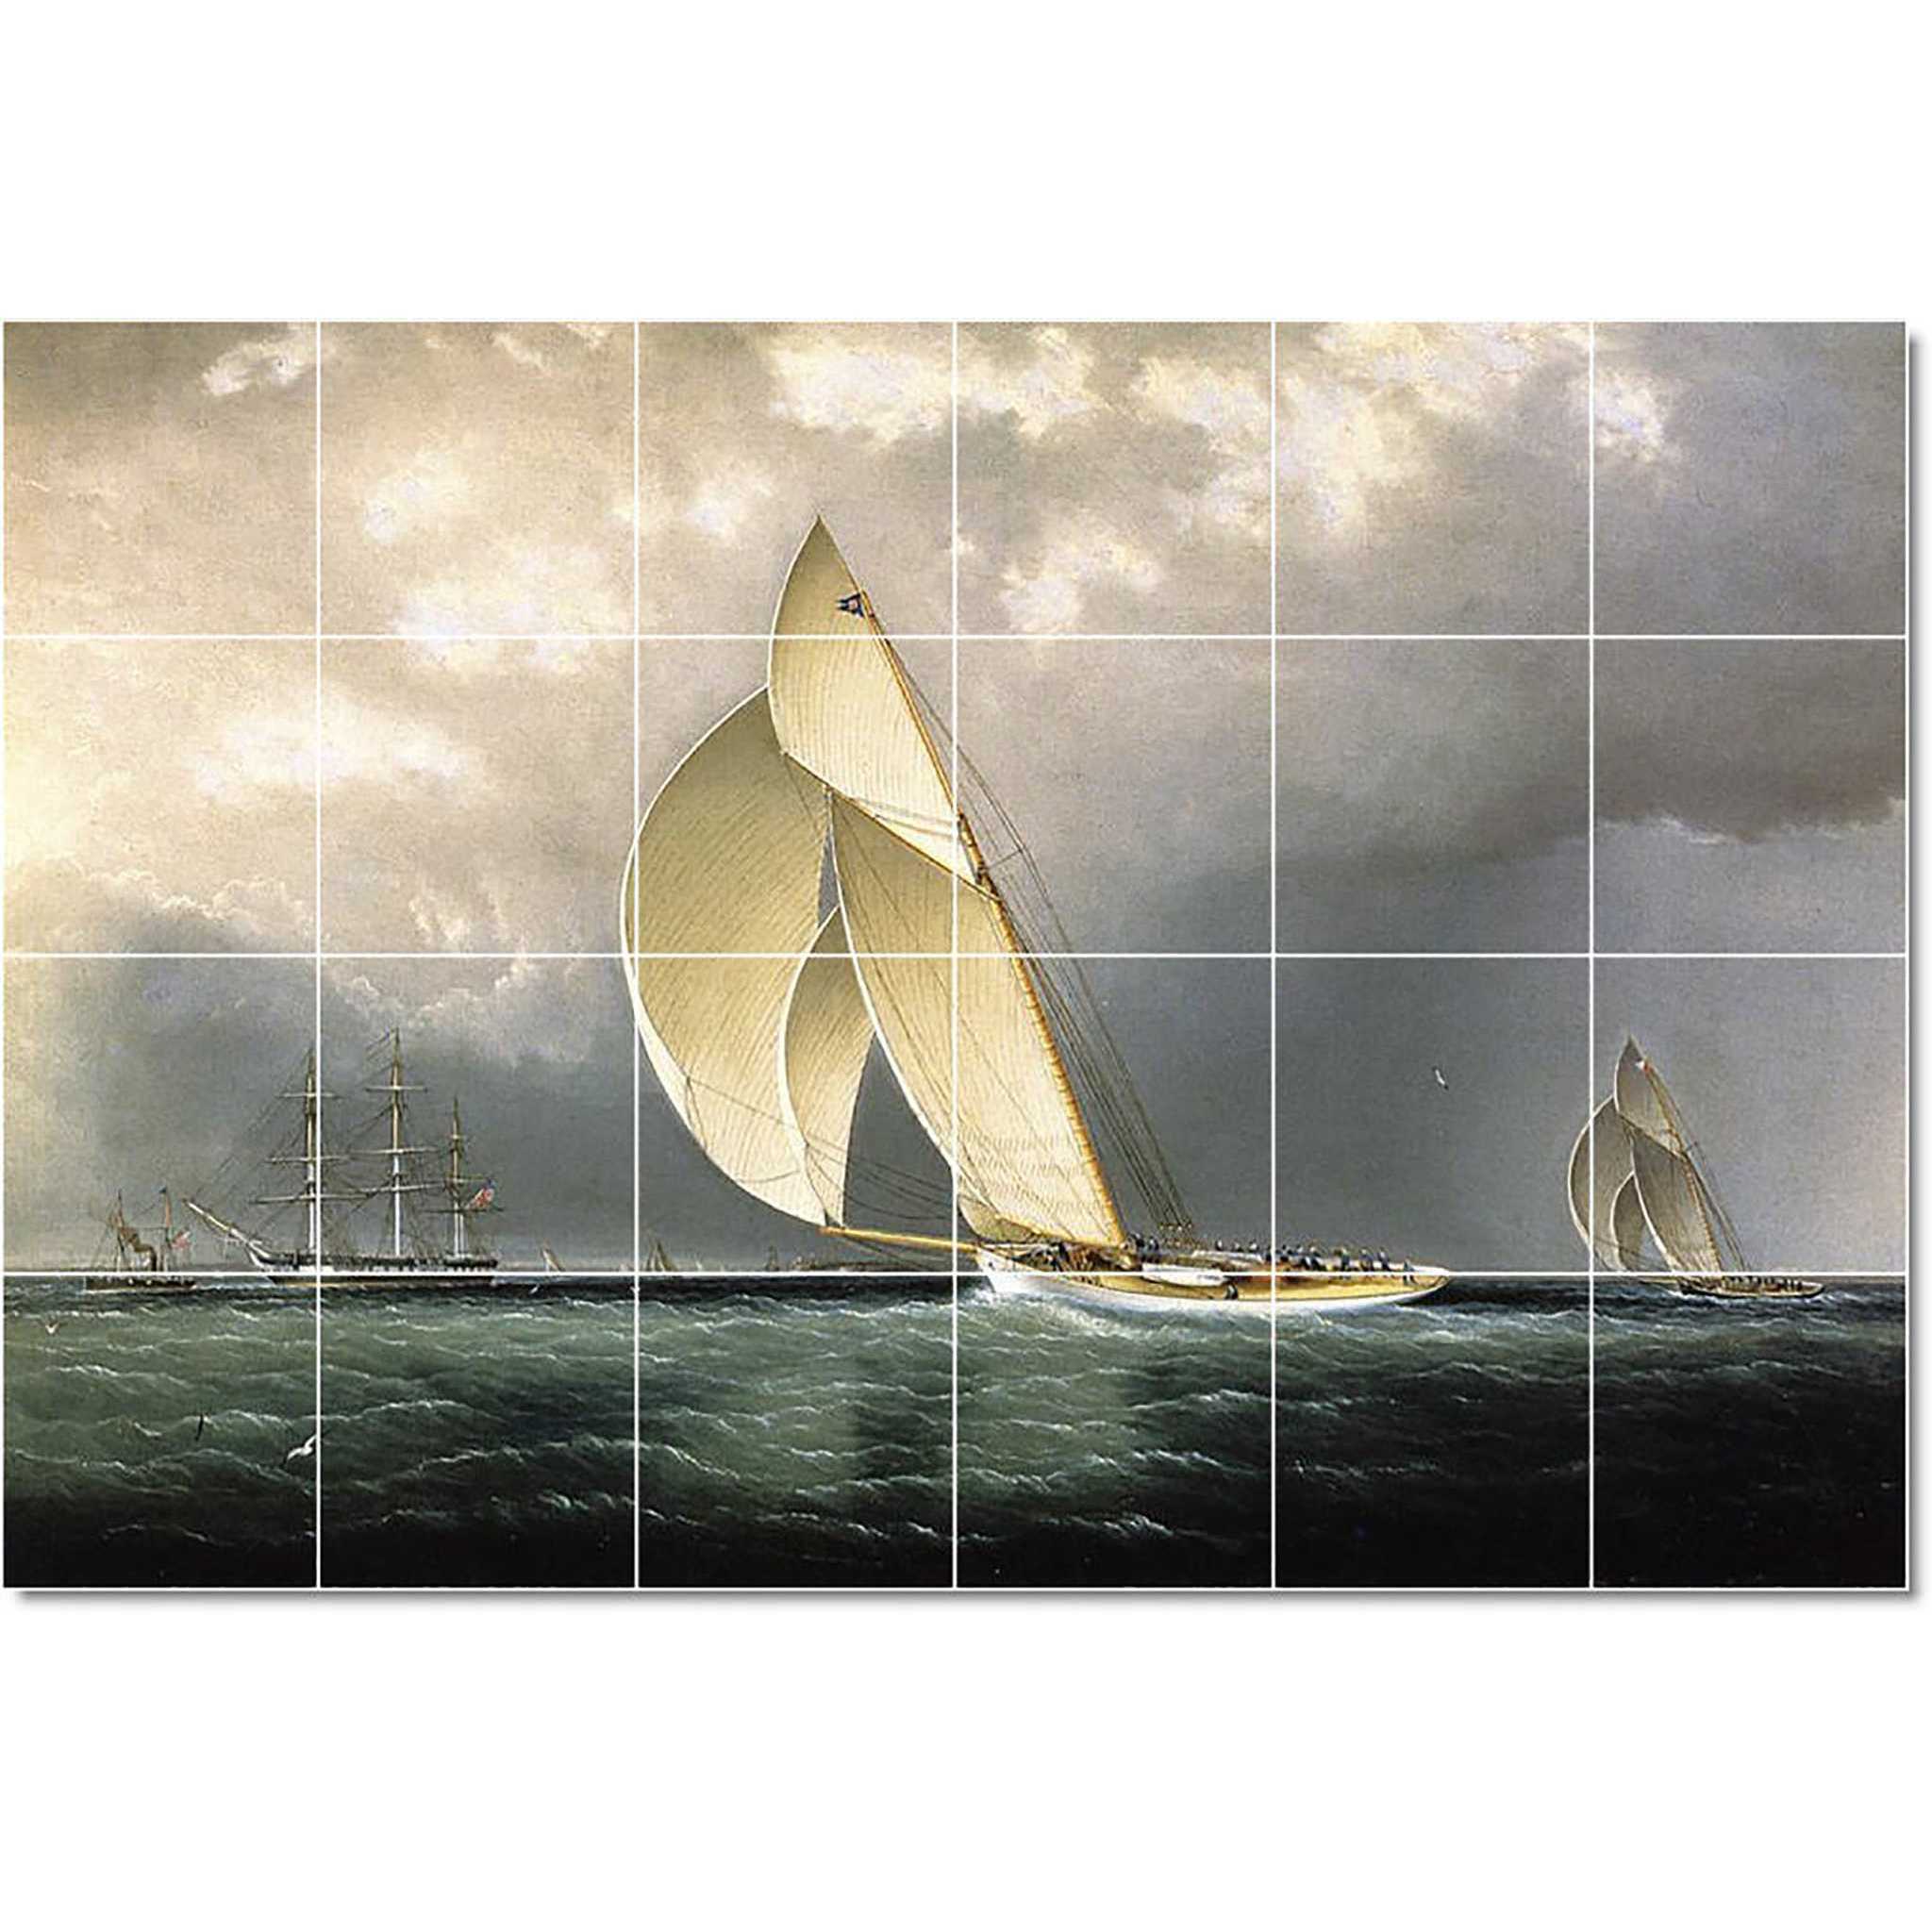 james buttersworth boat ship painting ceramic tile mural p22188